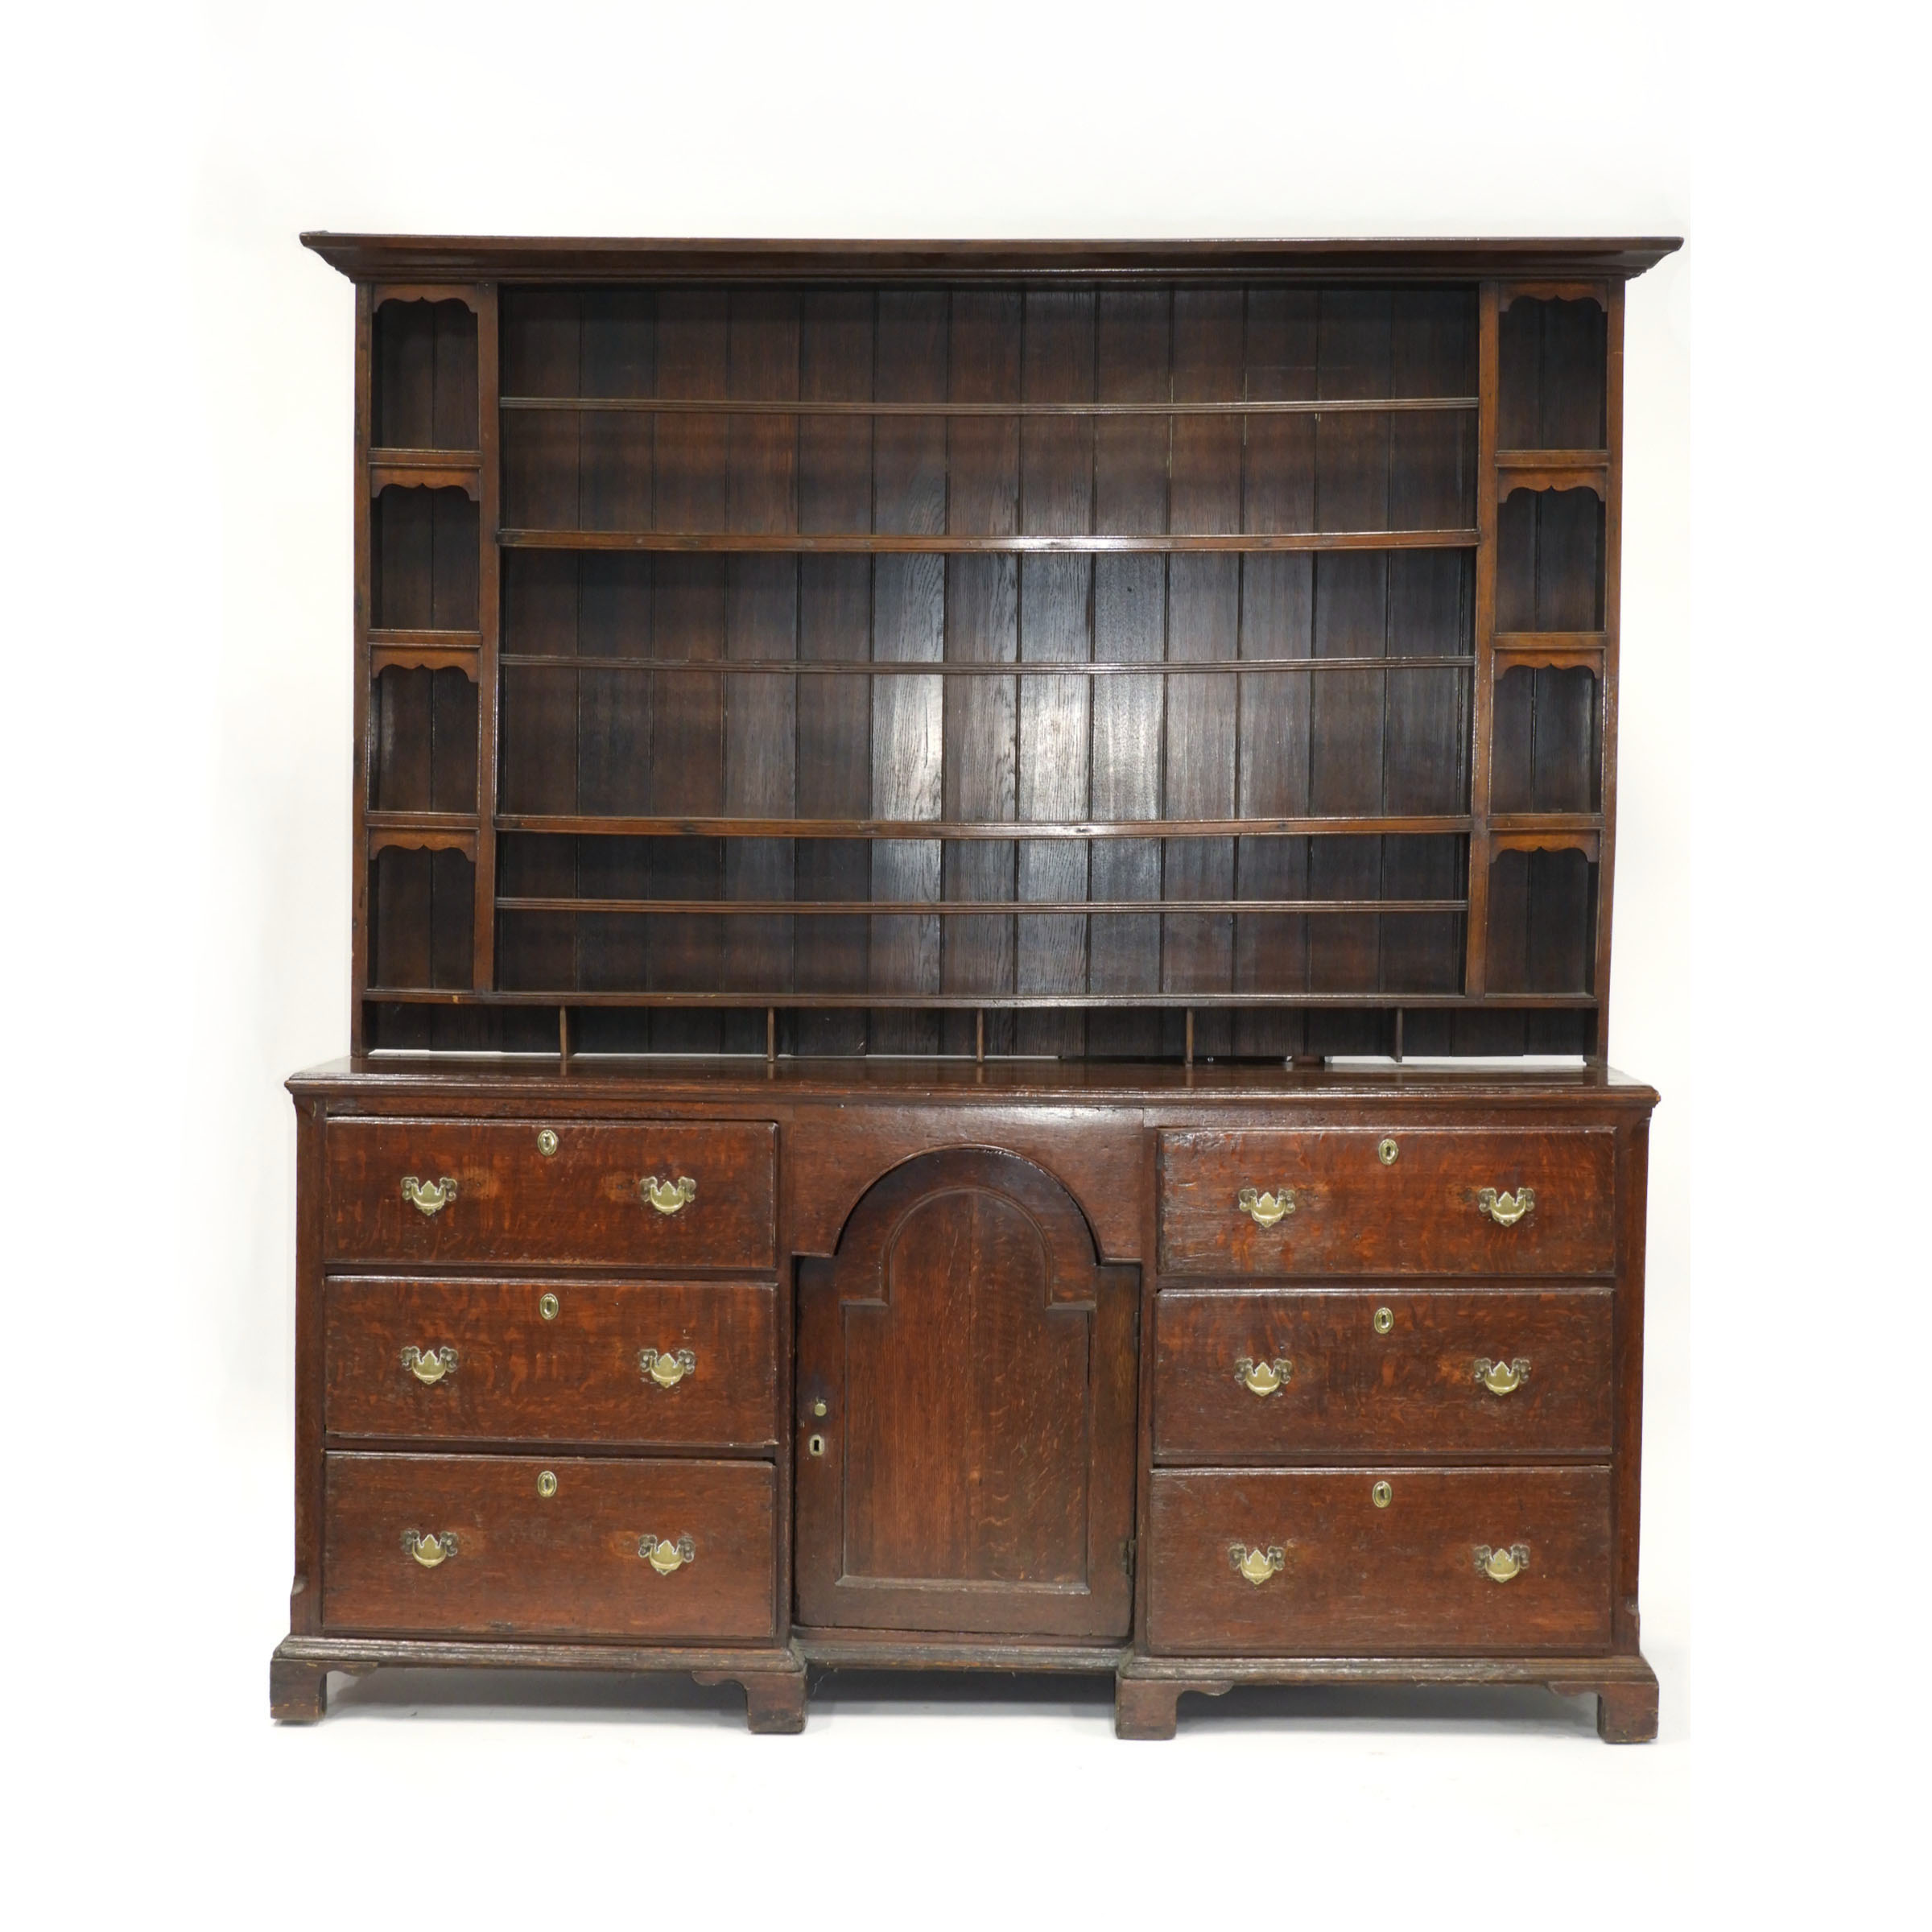 English Oak High Dresser, late 18th century